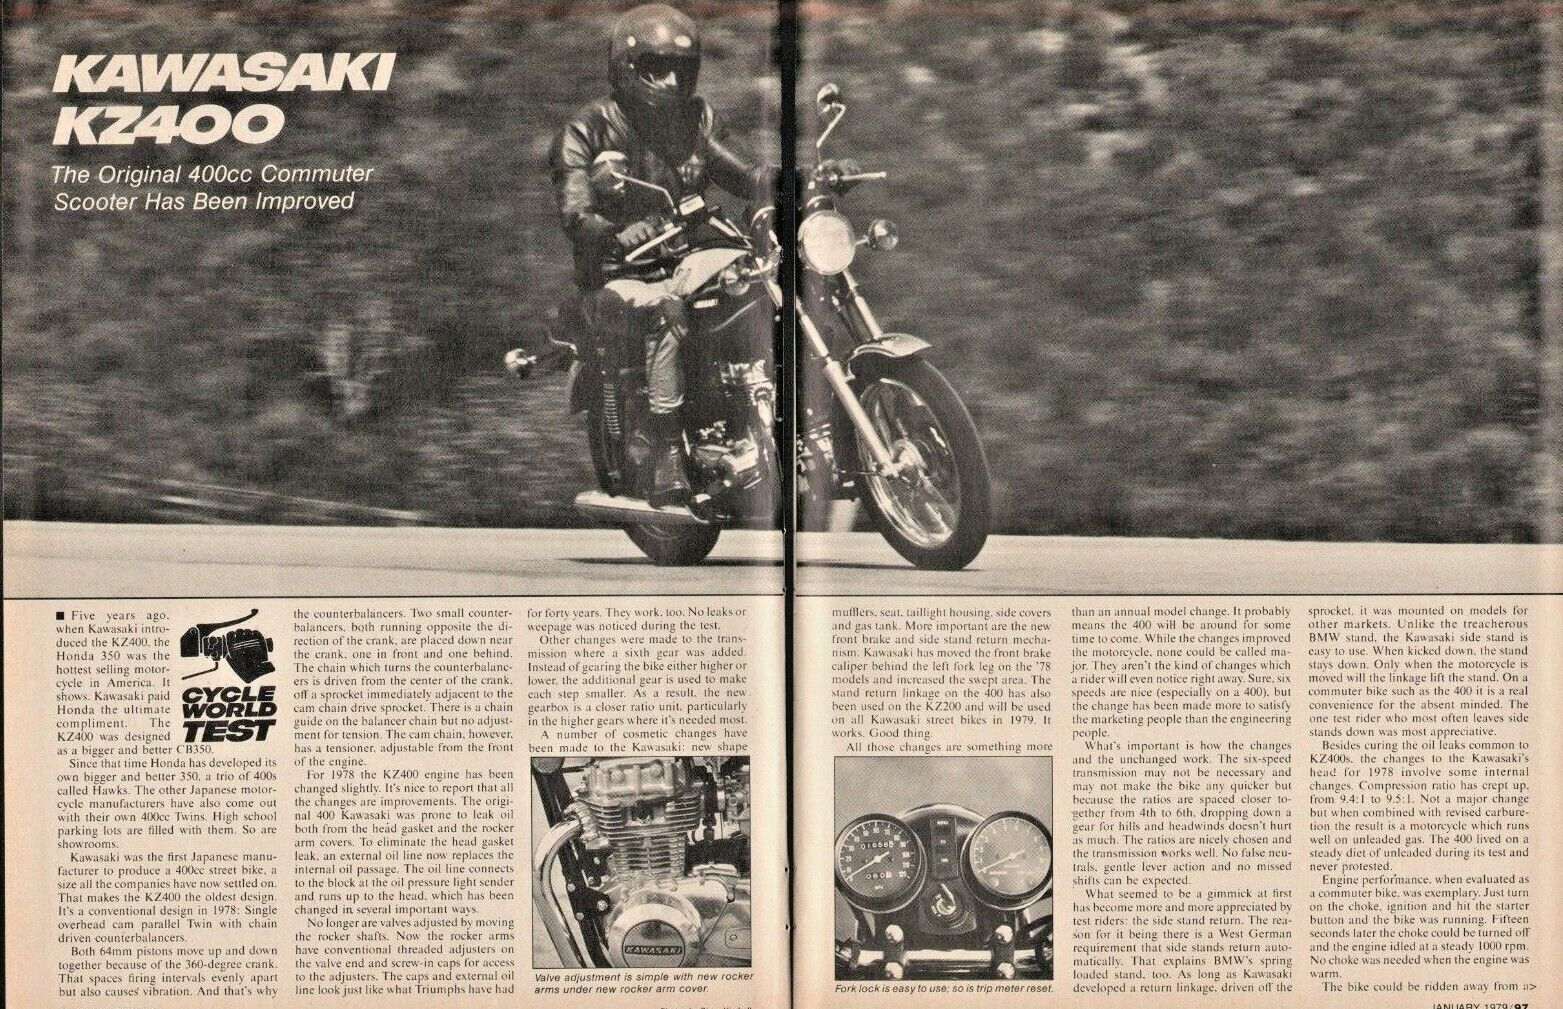 1979 Kawasaki KZ400 - 4-Page Vintage Motorcycle Road Test Article